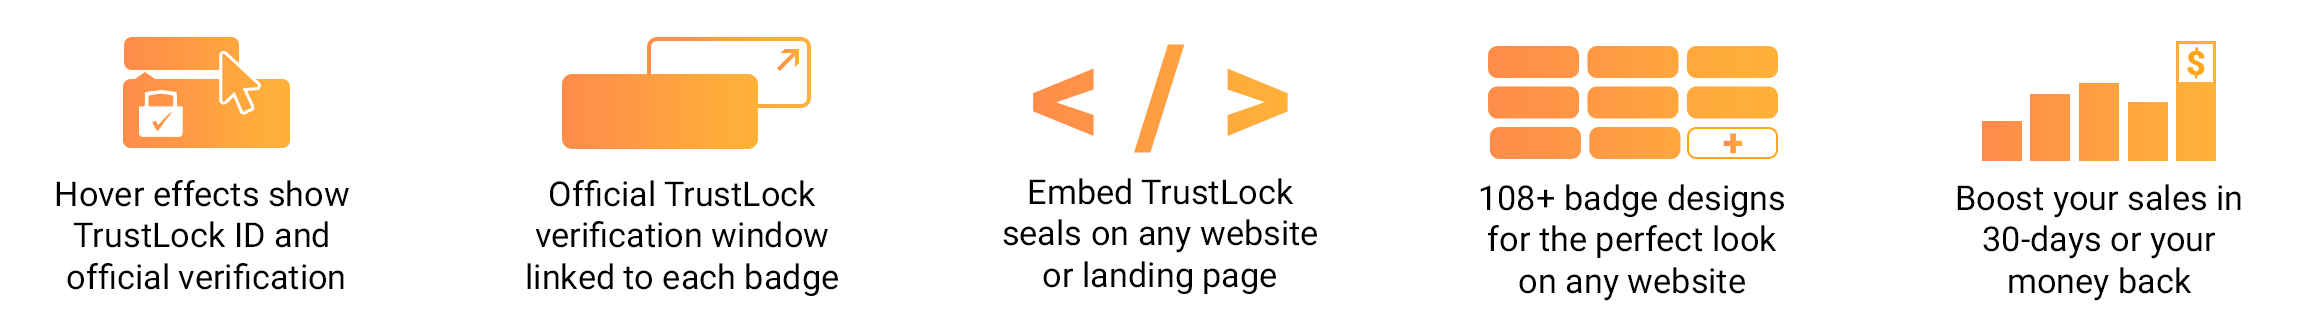 trustlock trust badge characteristics and features